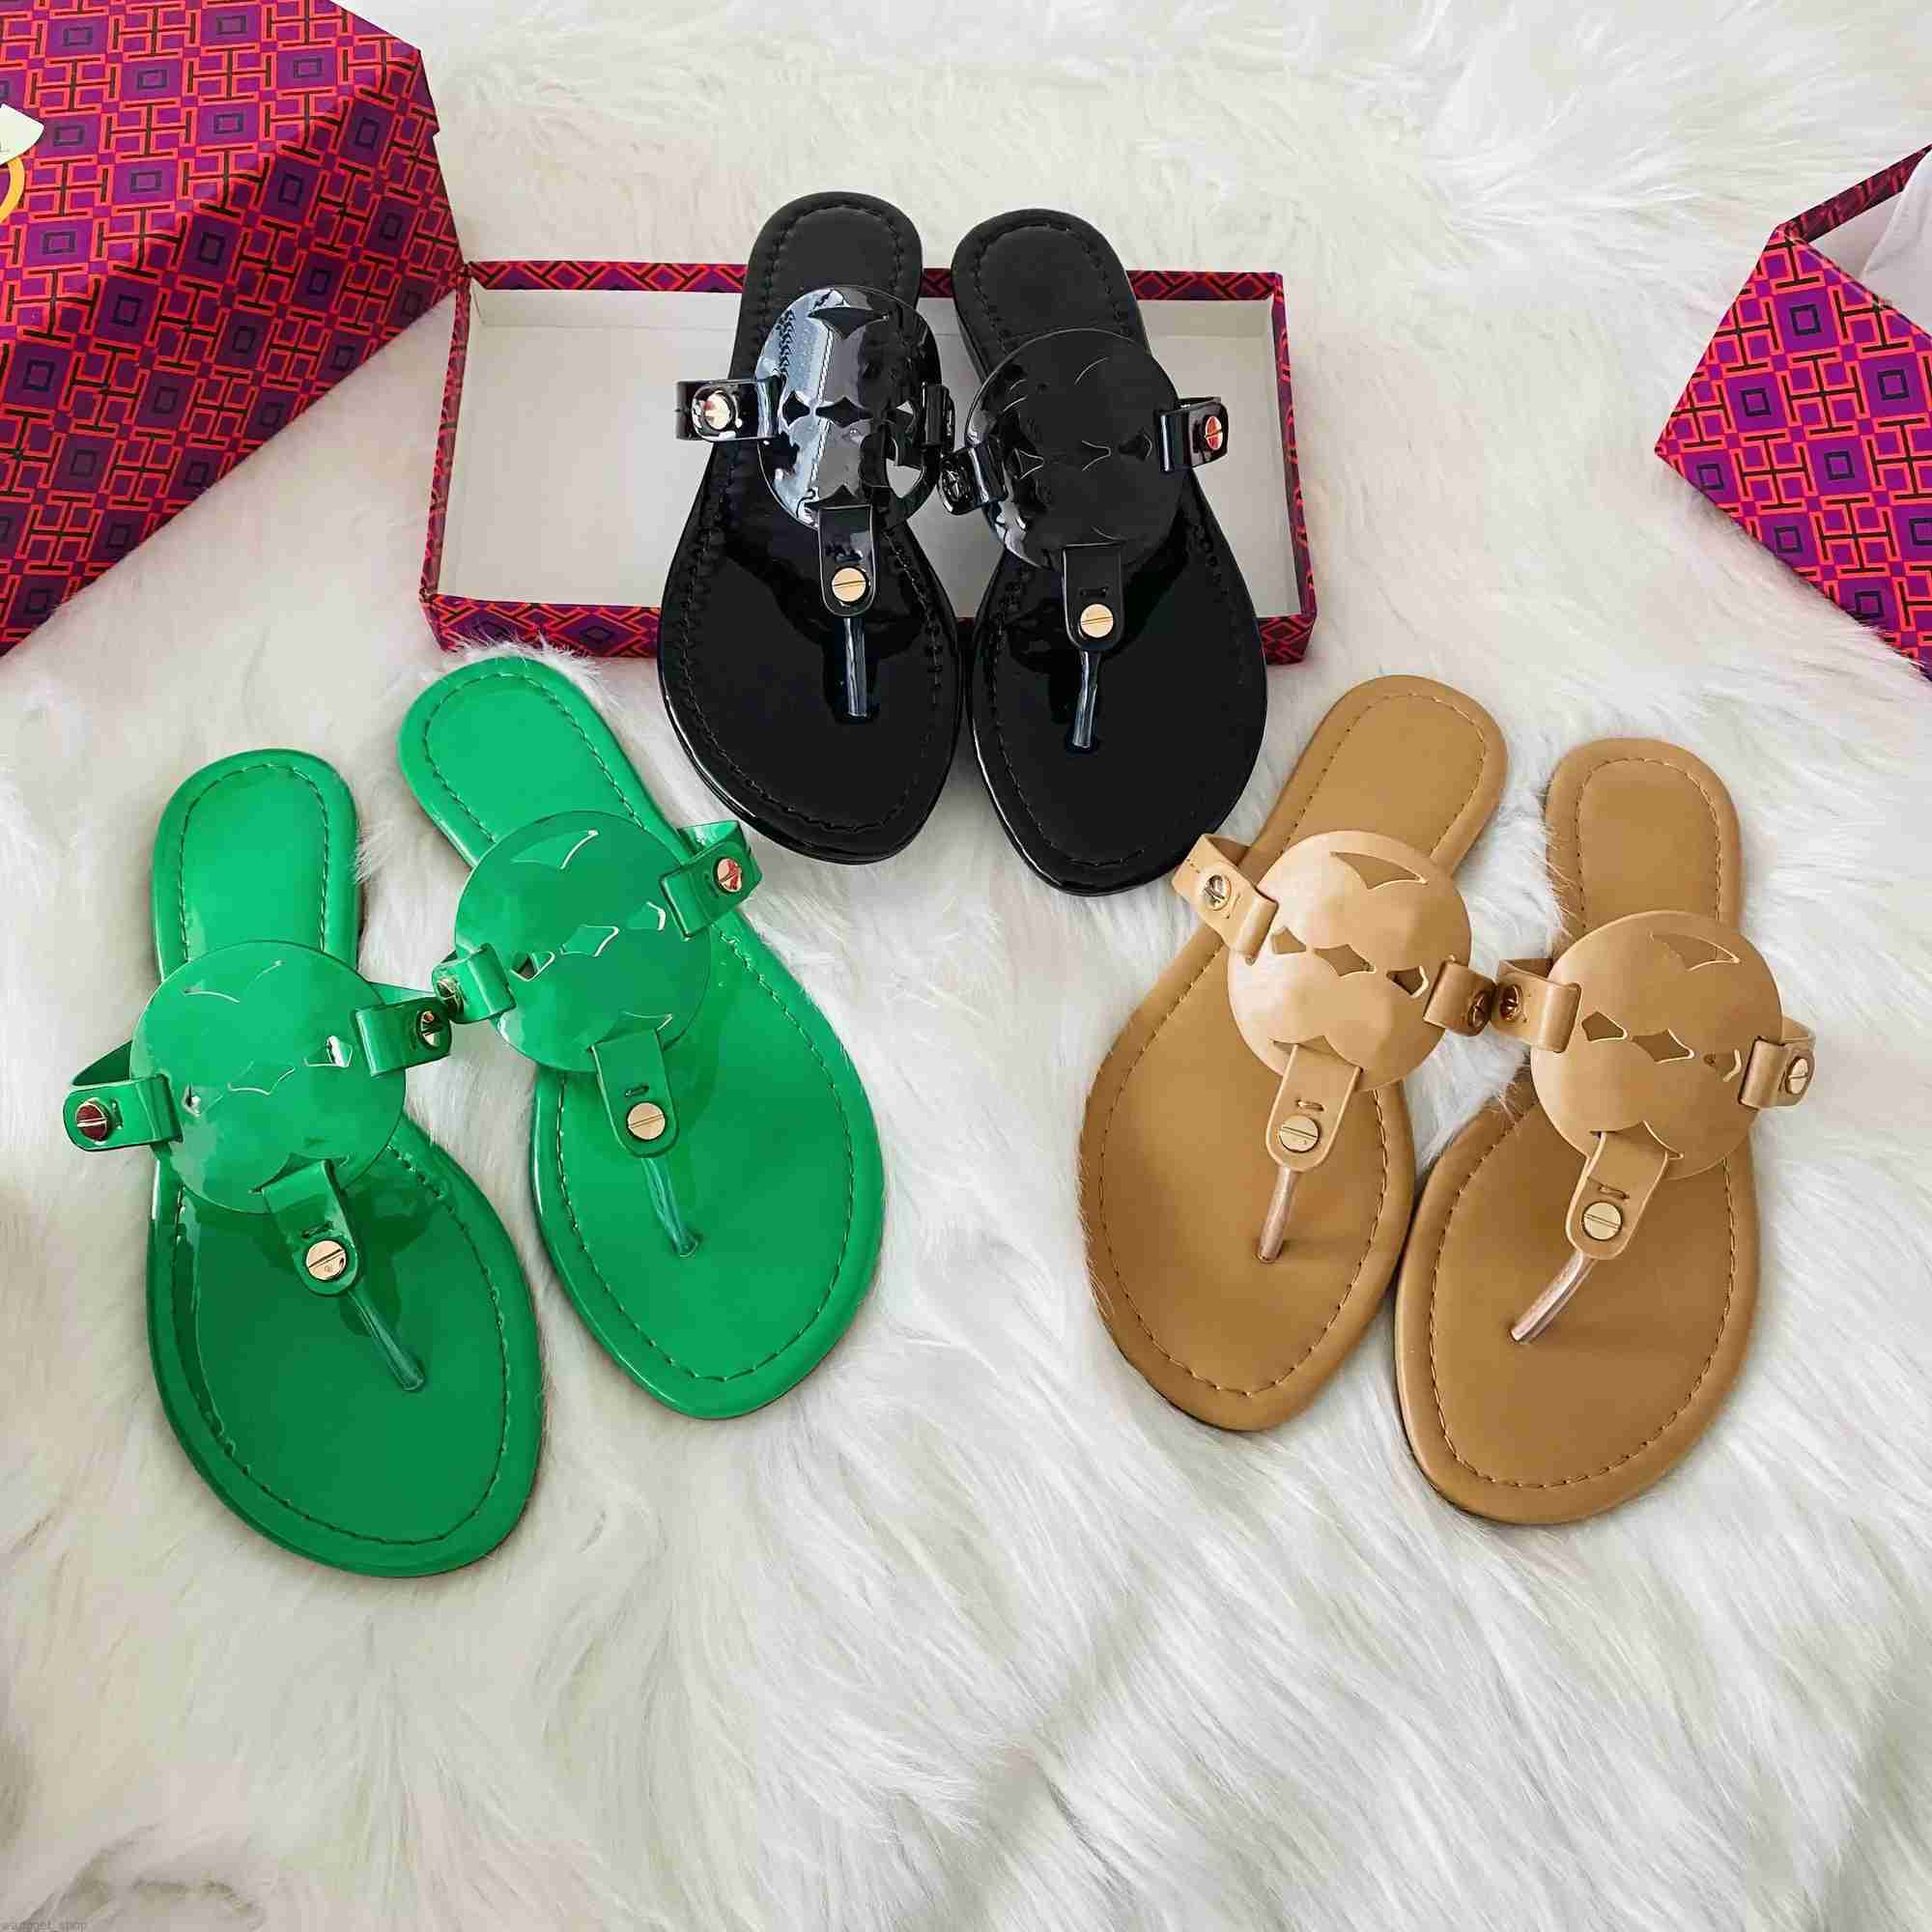 

Luxury Brand Sandals Designer Slippers Slides Floral Brocade Genuine Leather Flip Flops Women Shoes Sandal without box by shoe10 20 good, #19